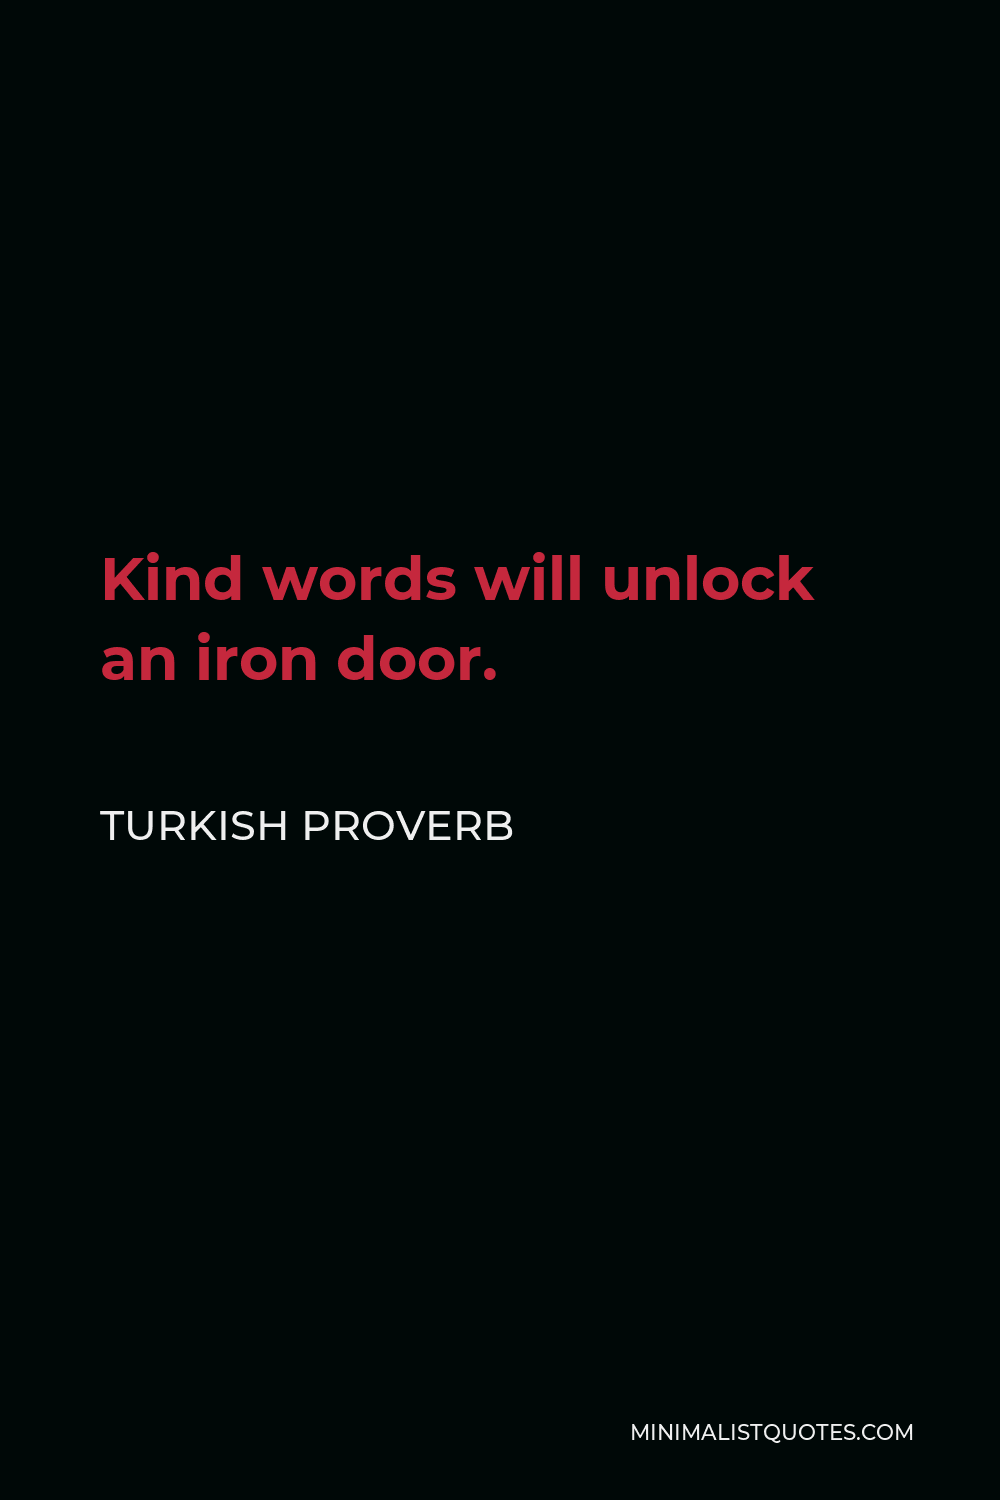 Turkish Proverb Quote - Kind words will unlock an iron door